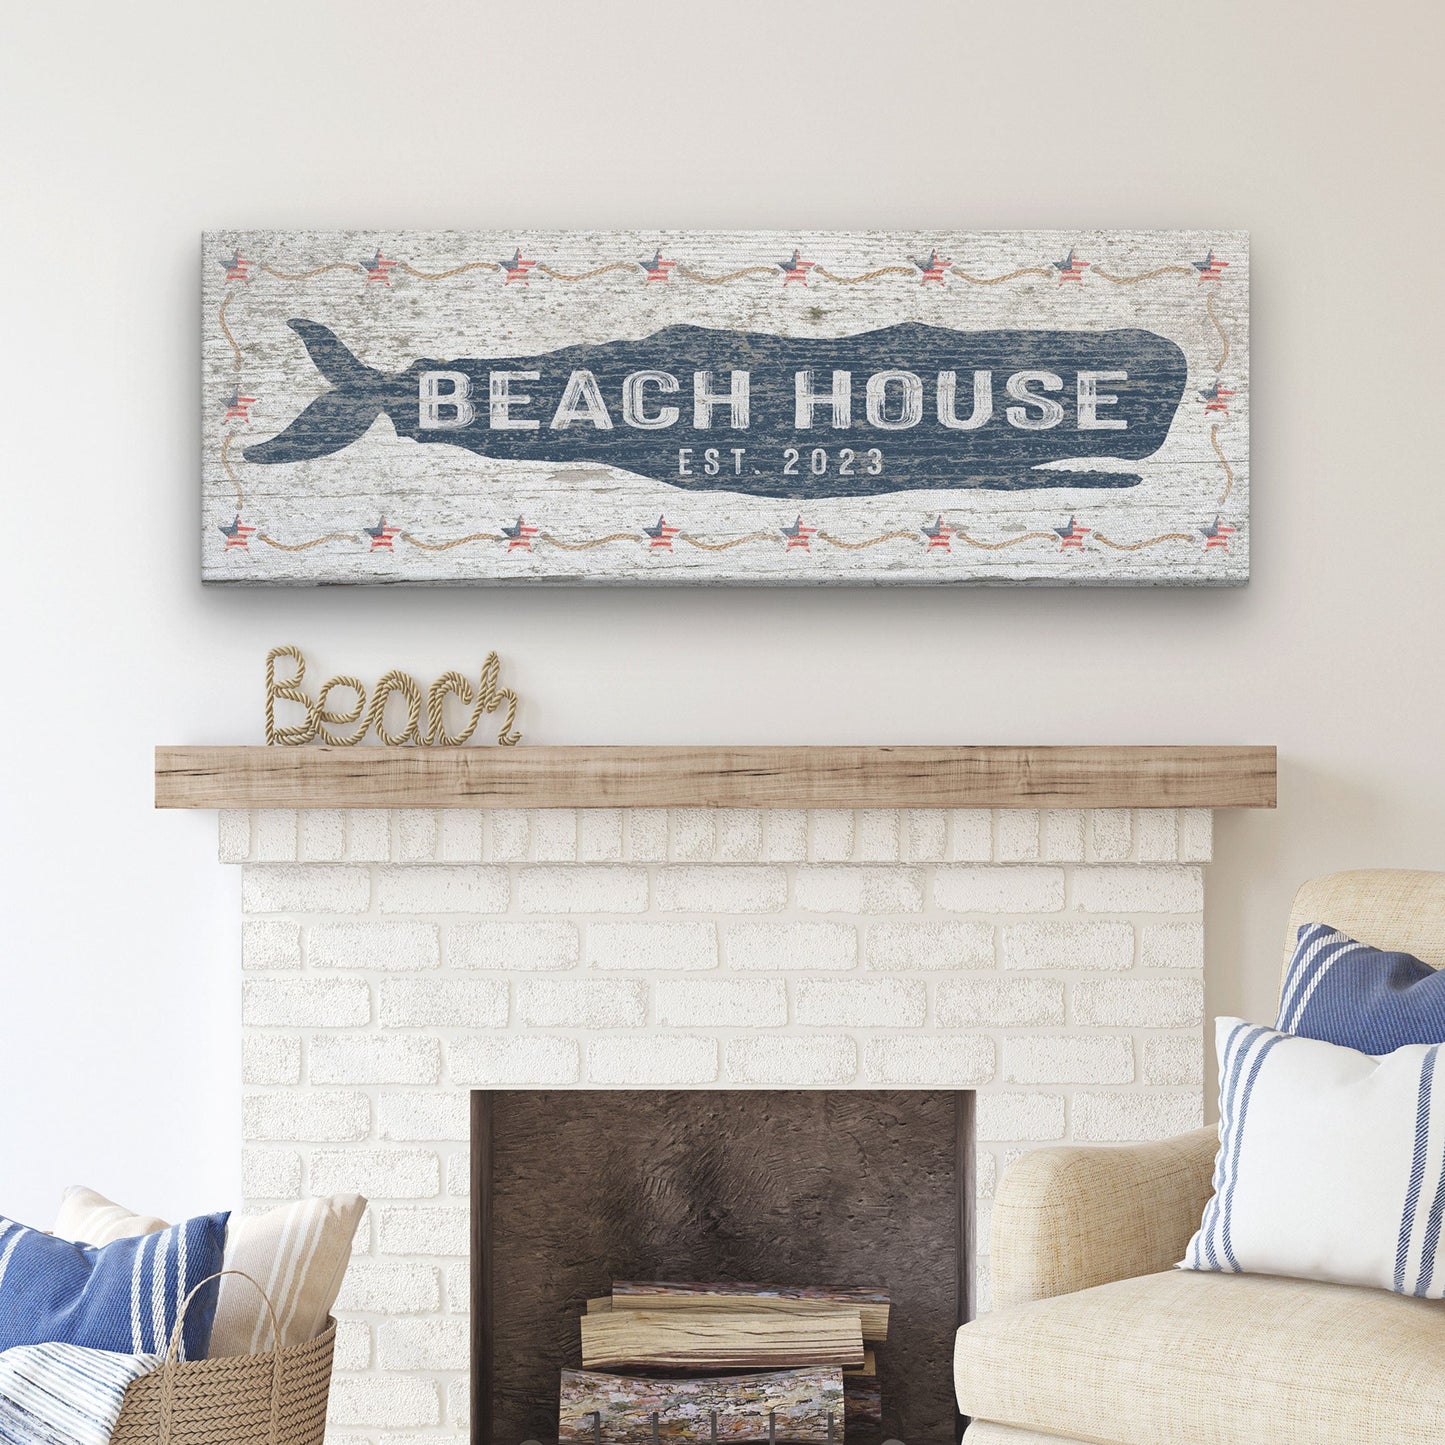 Whale Beach House Canvas Sign - Personalized Beach House Decor